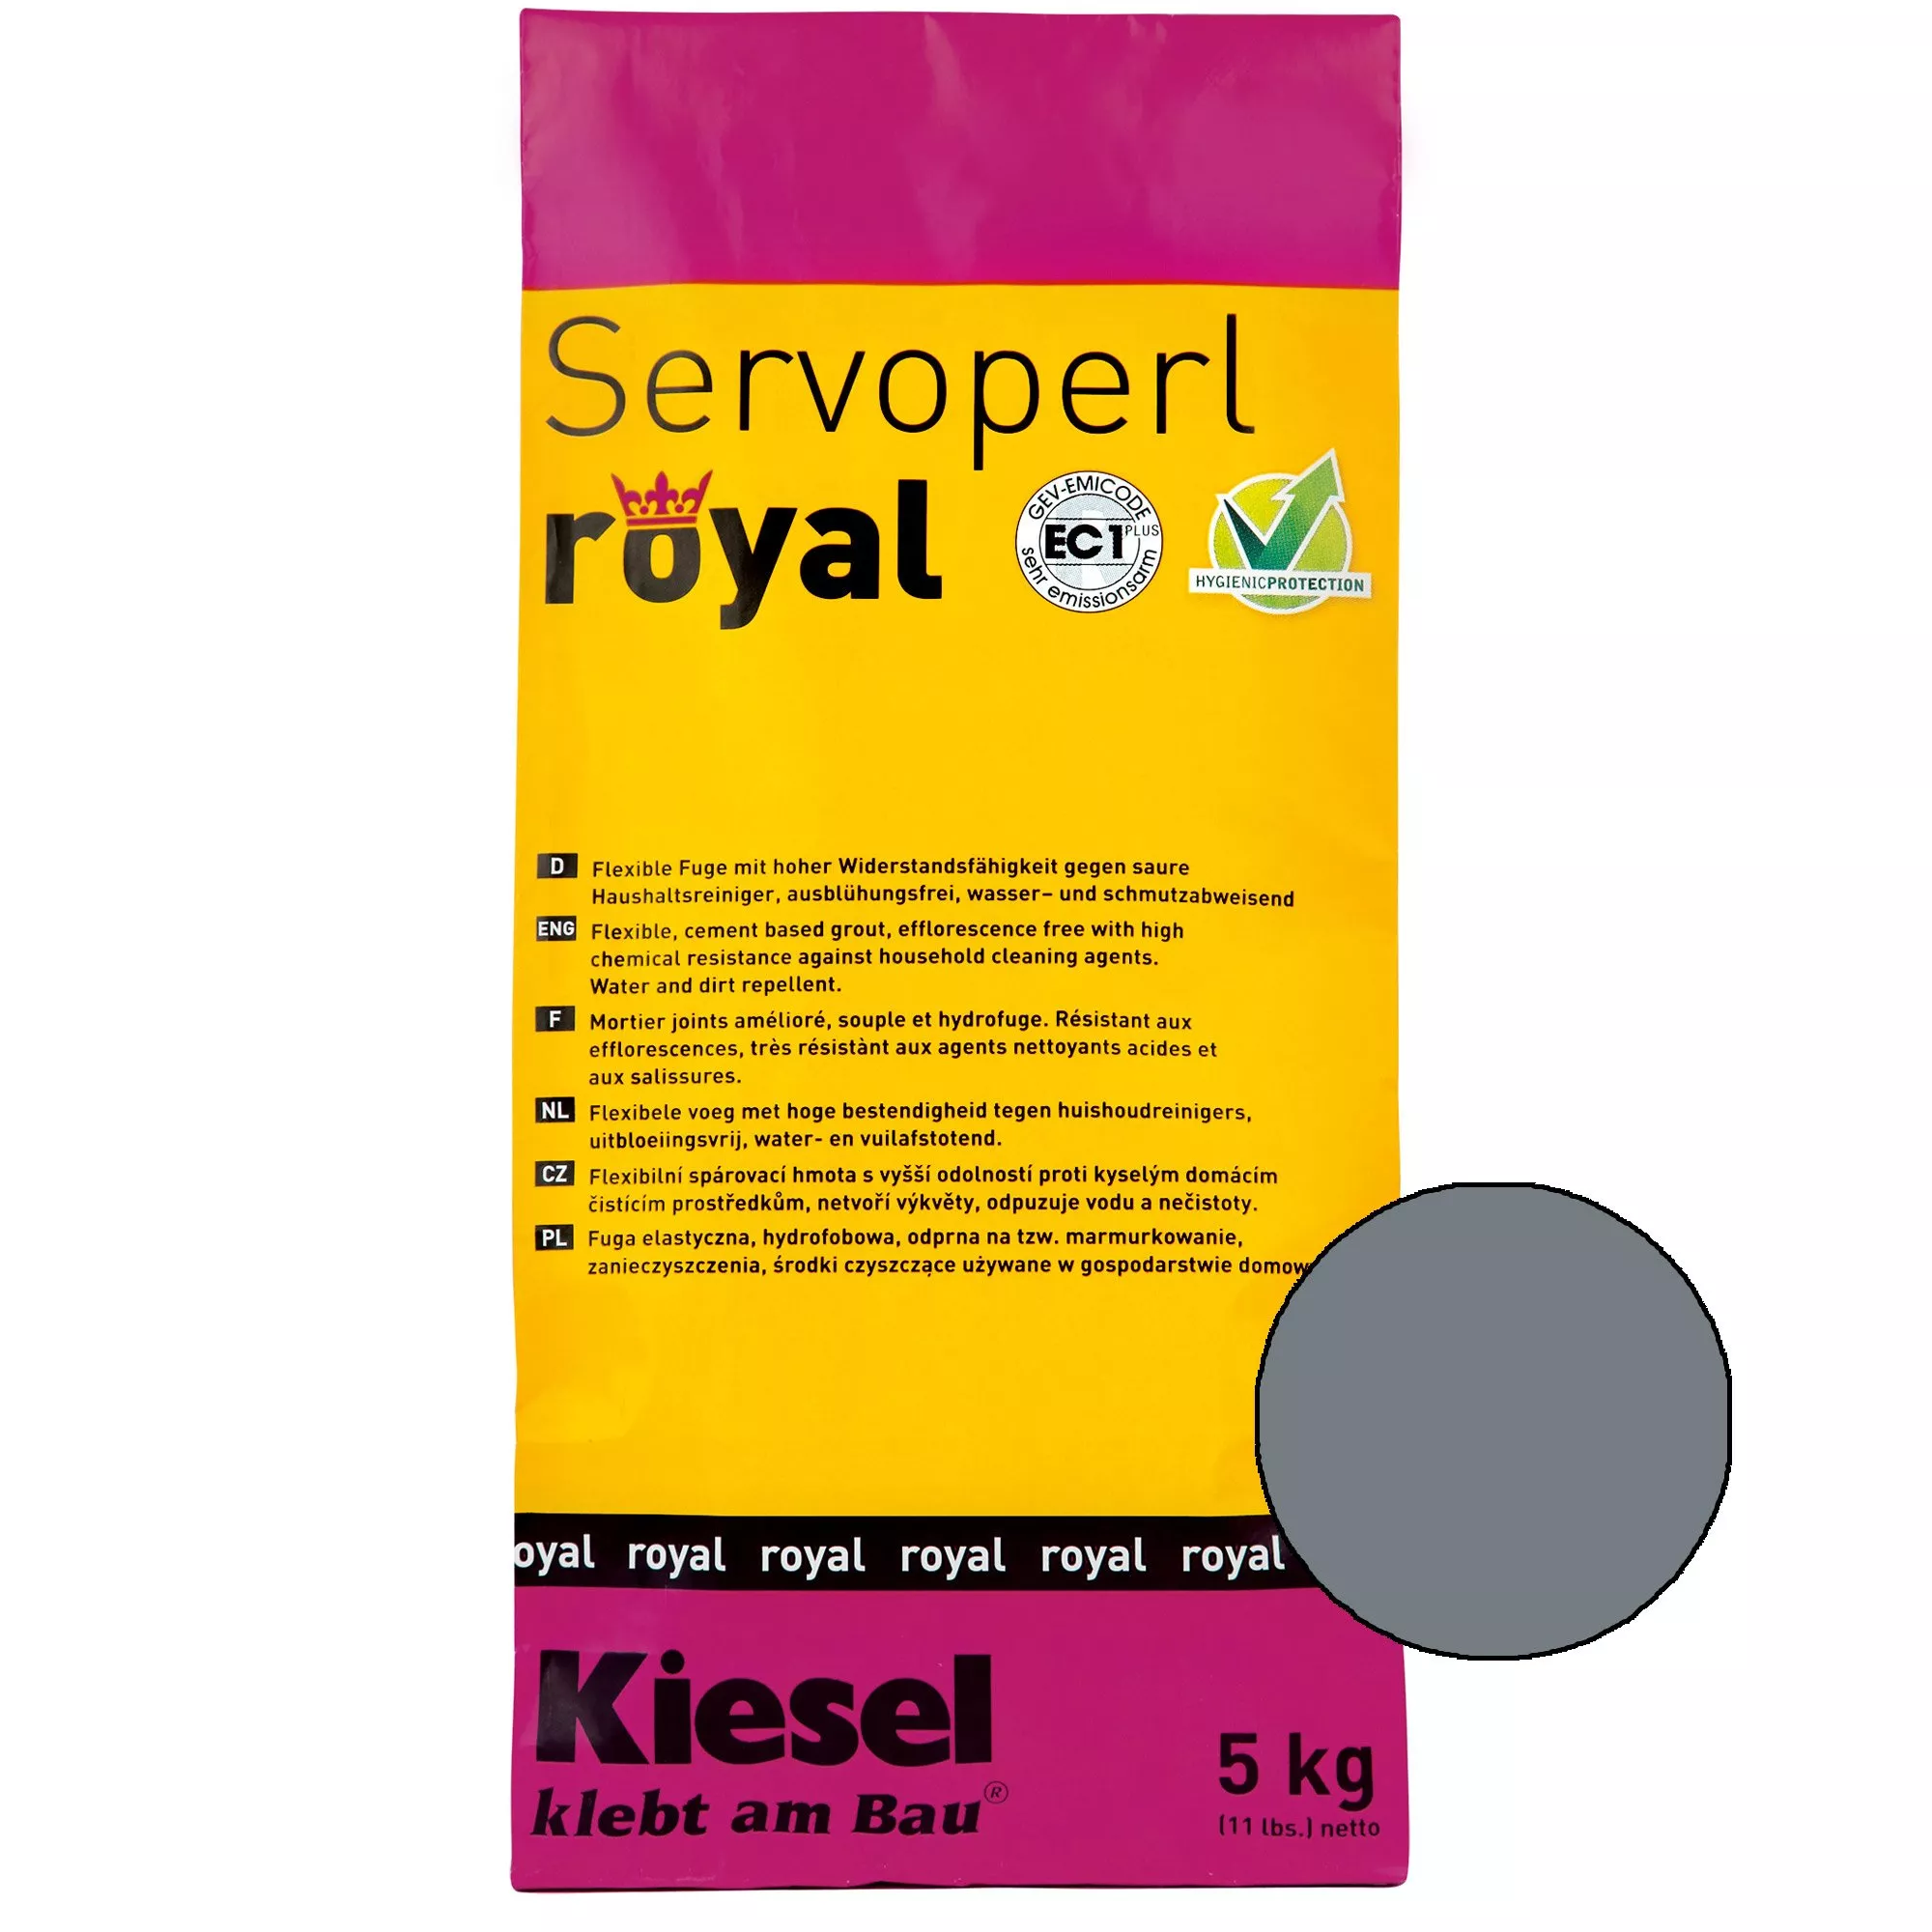 Kiesel Servoperl royal - composto comum-5kg de basalto